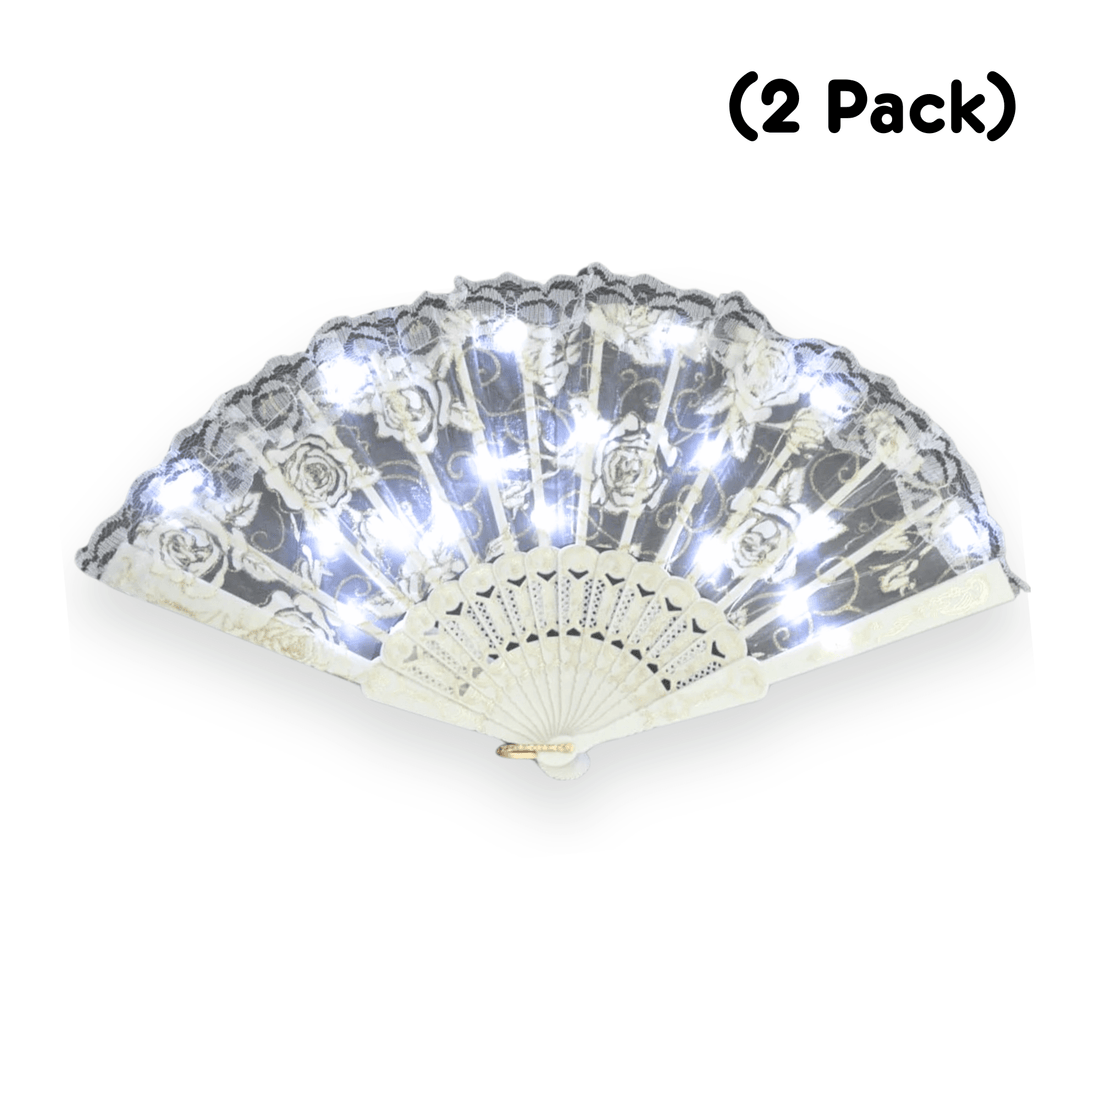 Rave Essentials Co. (2 Pack) Mini LED Lace Fan